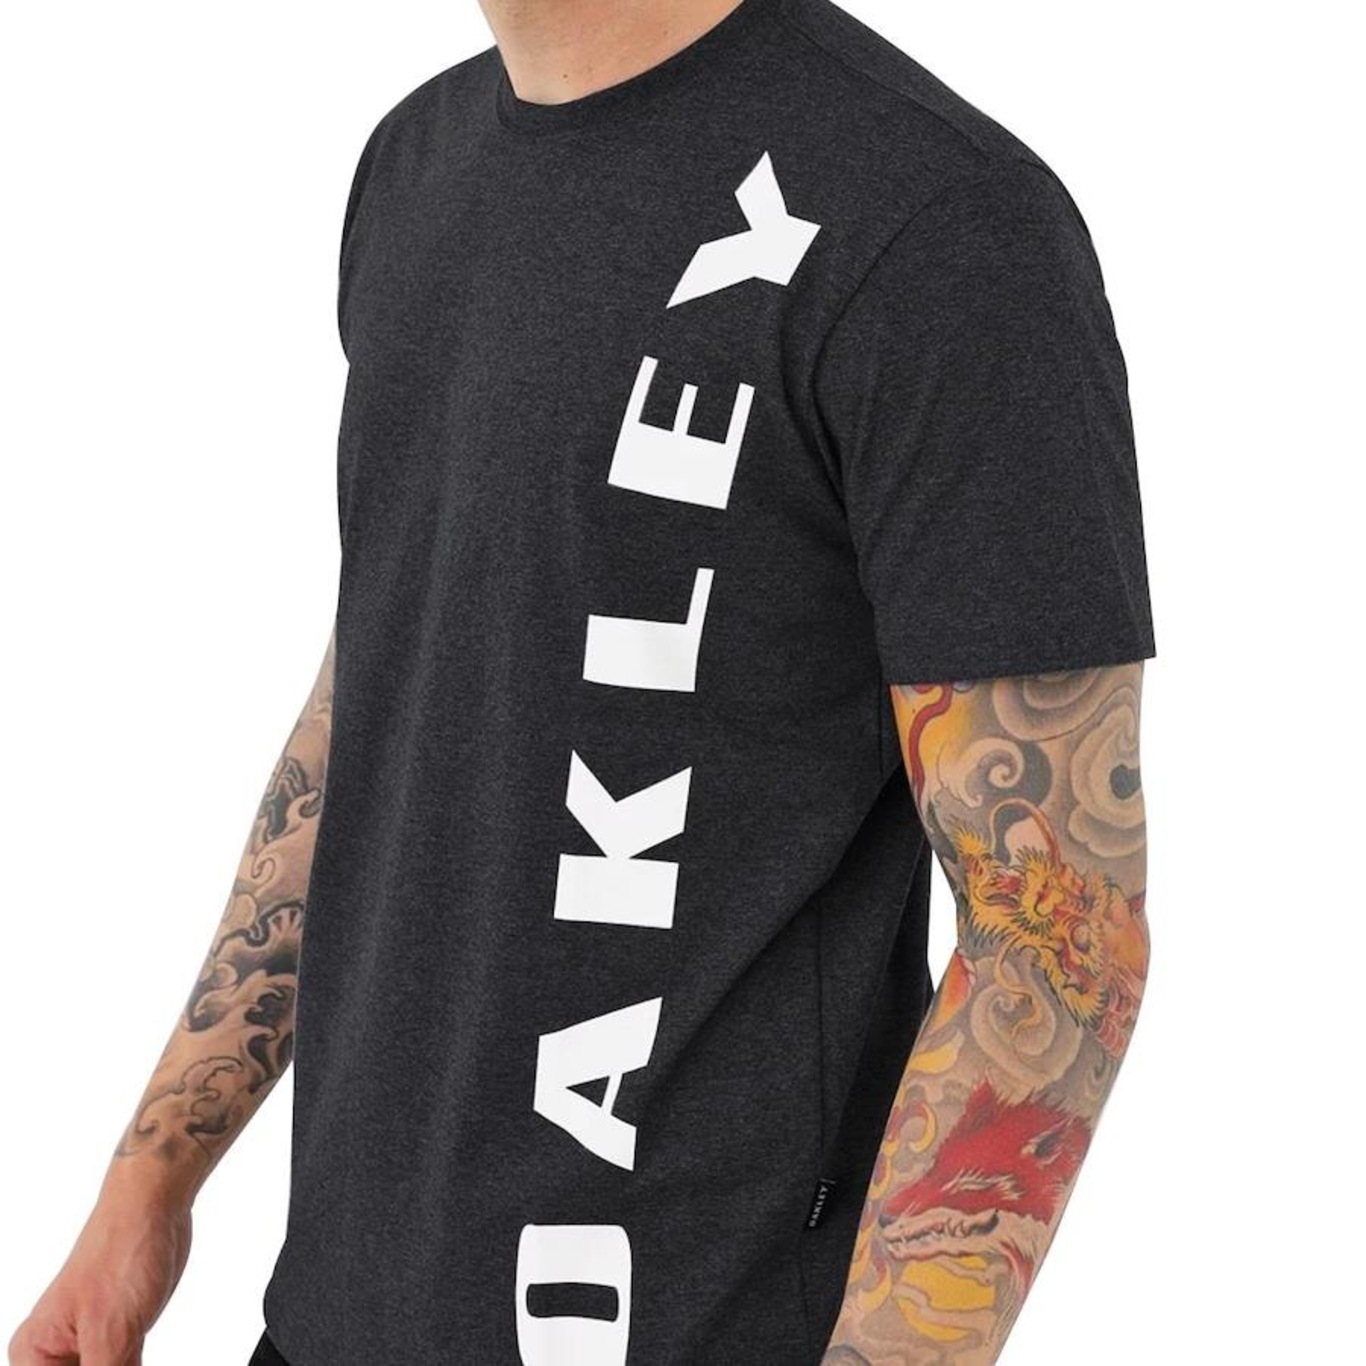 Oakley Camiseta Panthera Tattoo Tee - Blackout